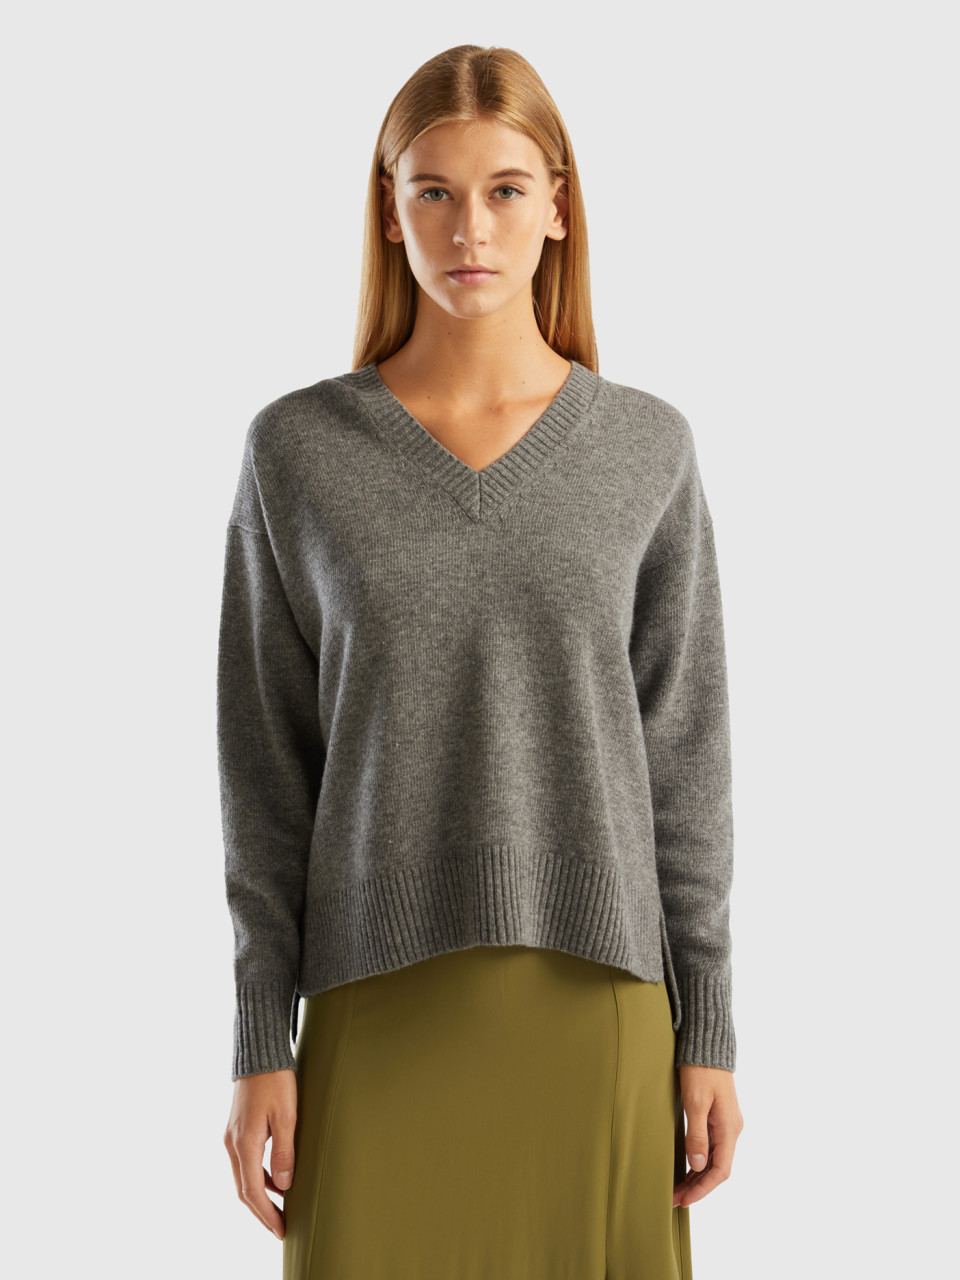 Benetton, Oversized Fit Sweater With Slits, Dark Gray, Women